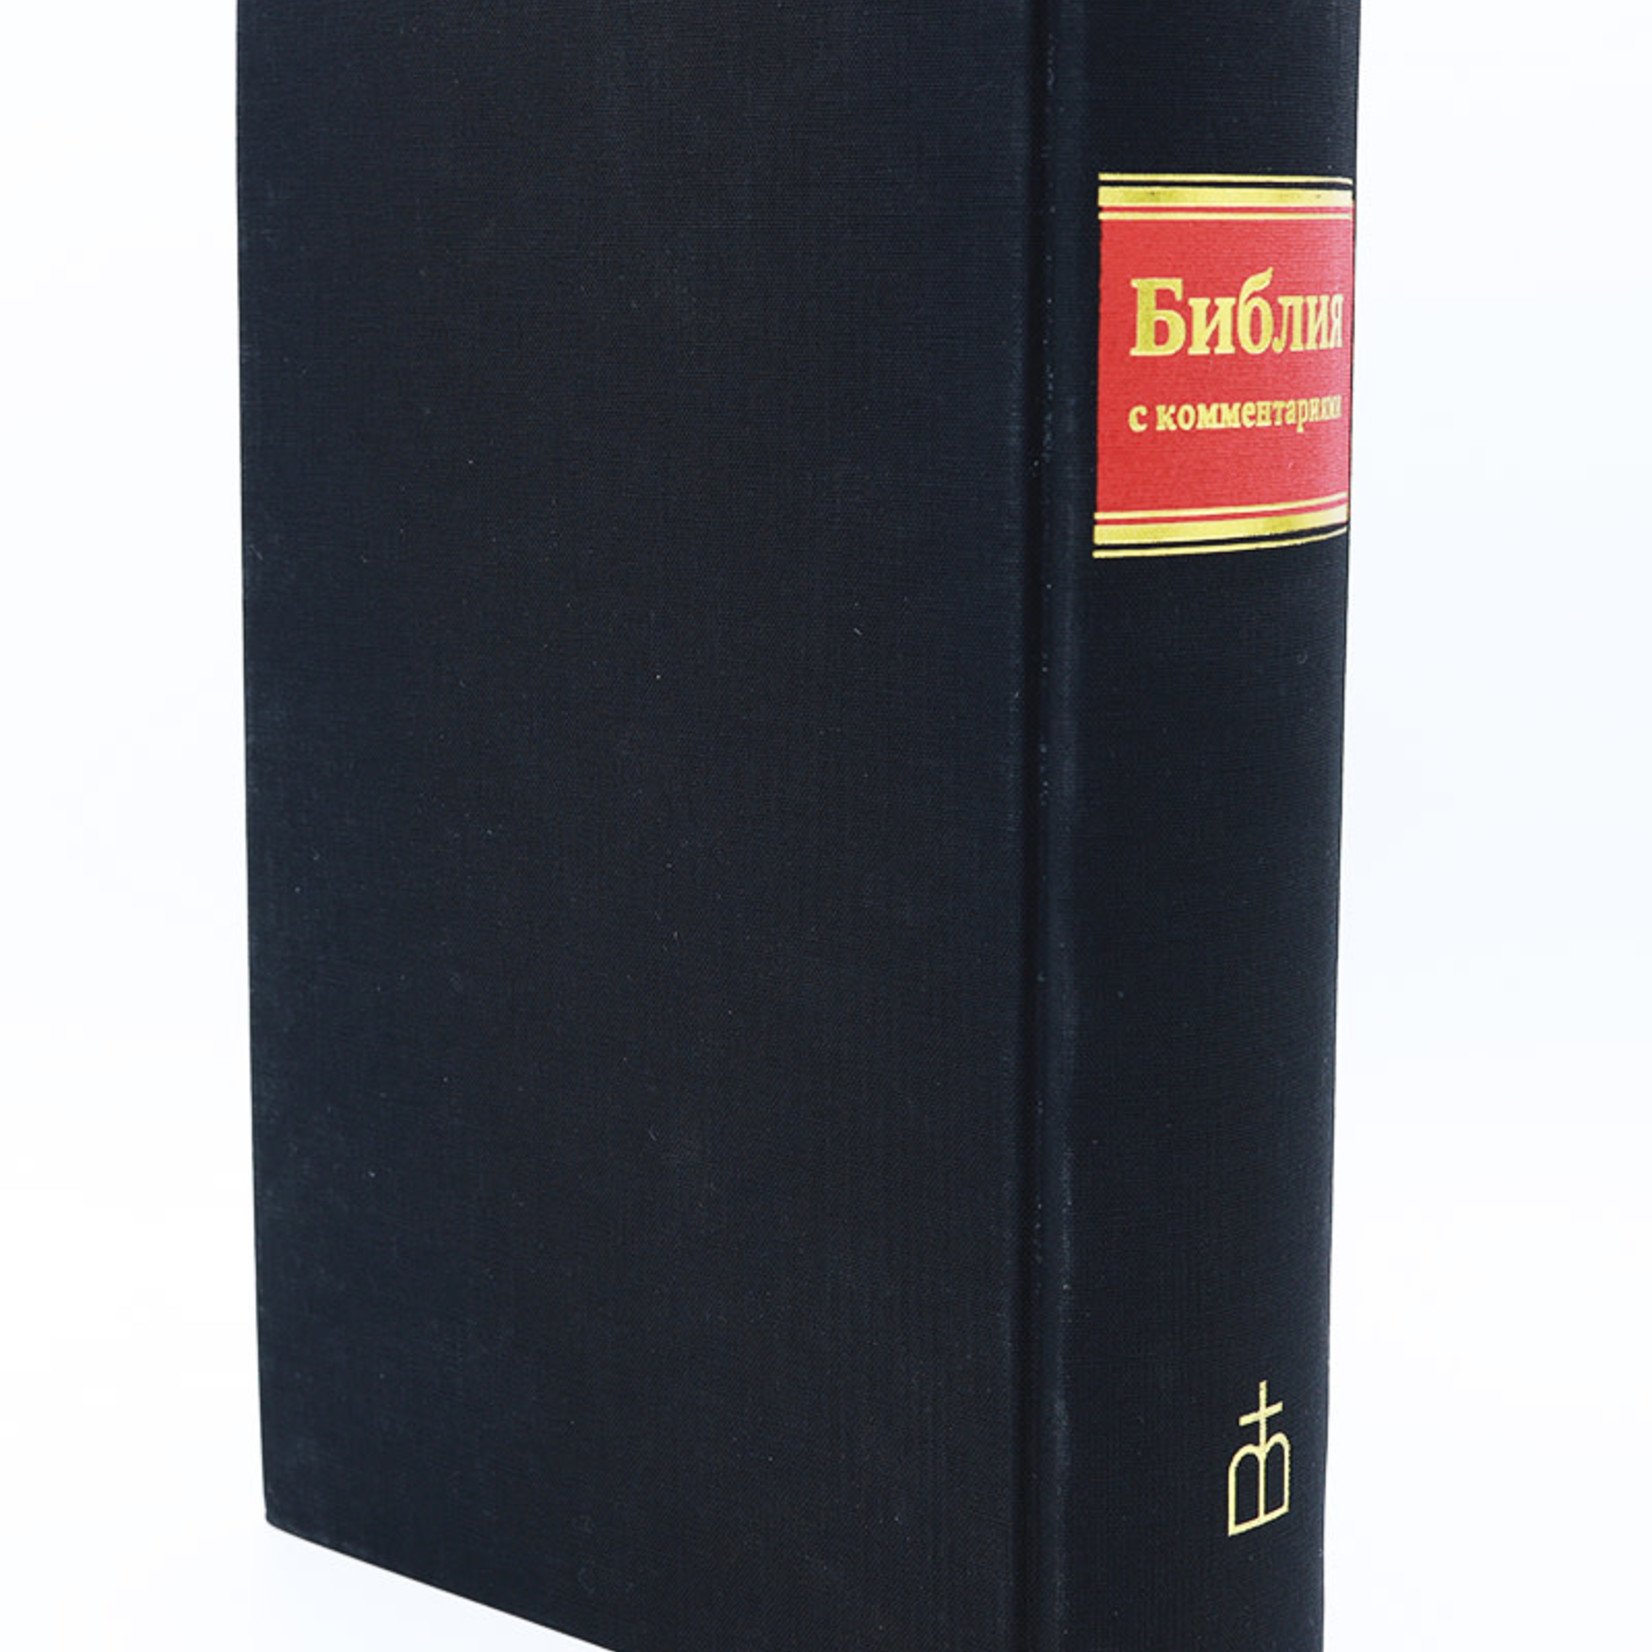 Библия с Комментариями (SYNO), Large, Black Cloth Hardcover